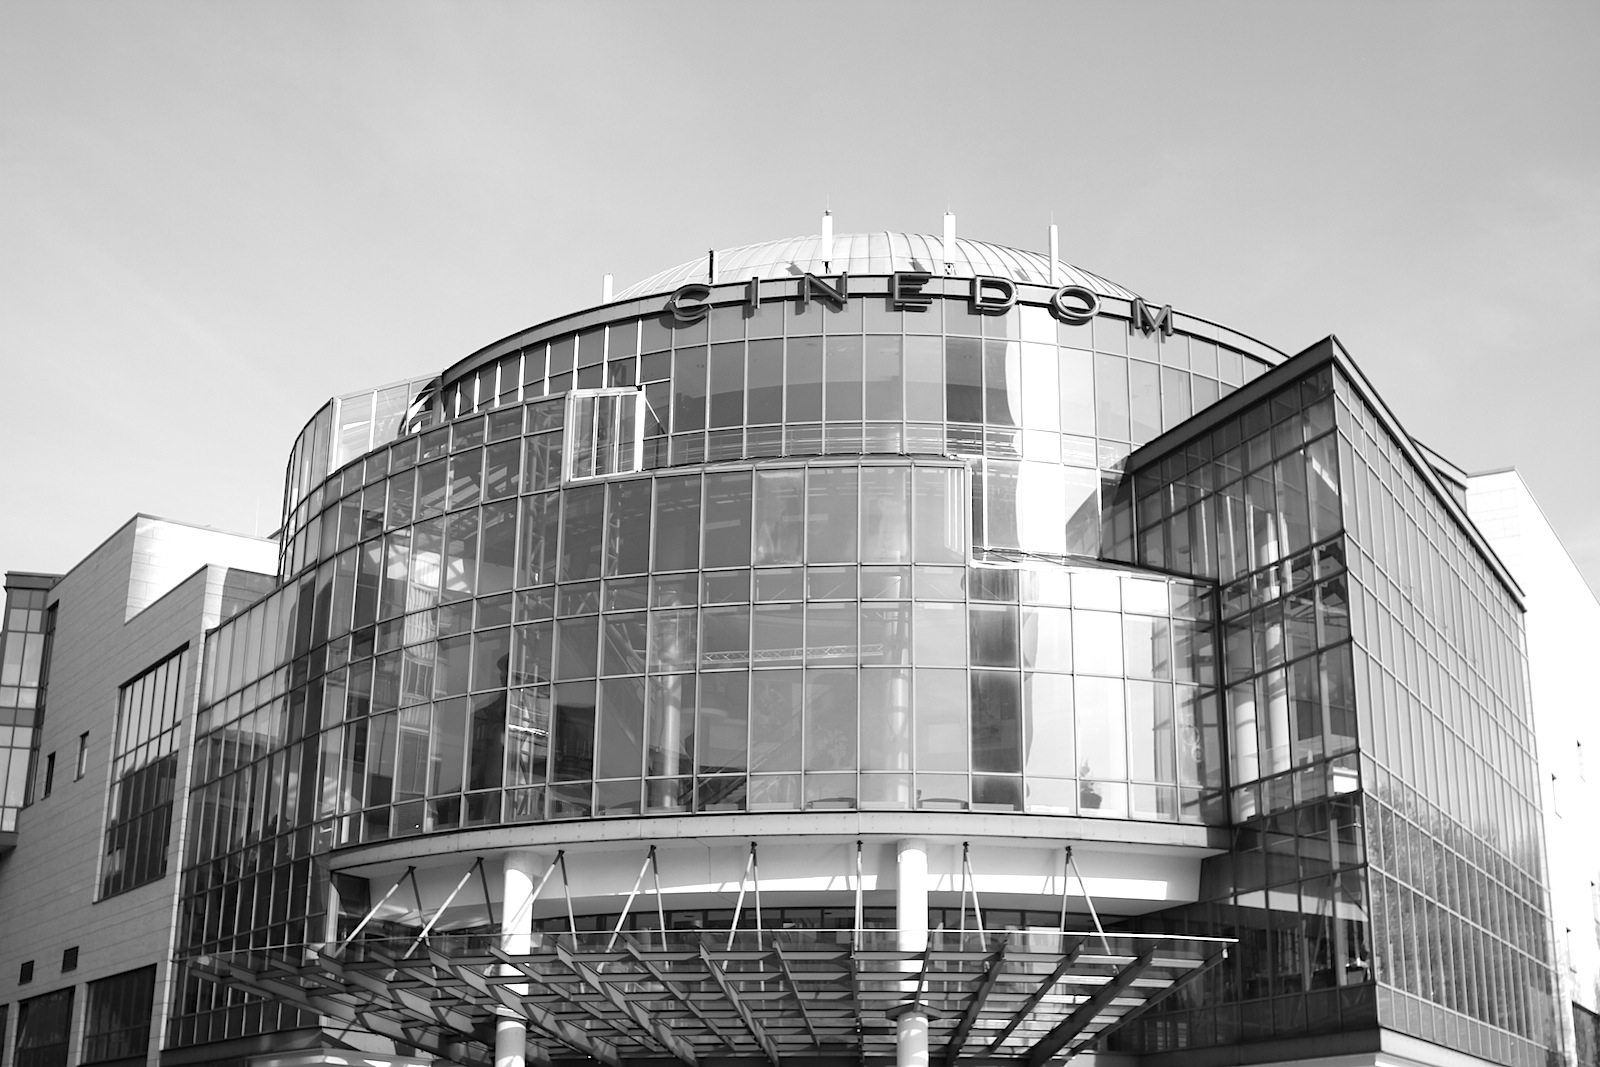 The glass rotunda of the multiplex cinema was designed by Zeidler Partnership Architects.